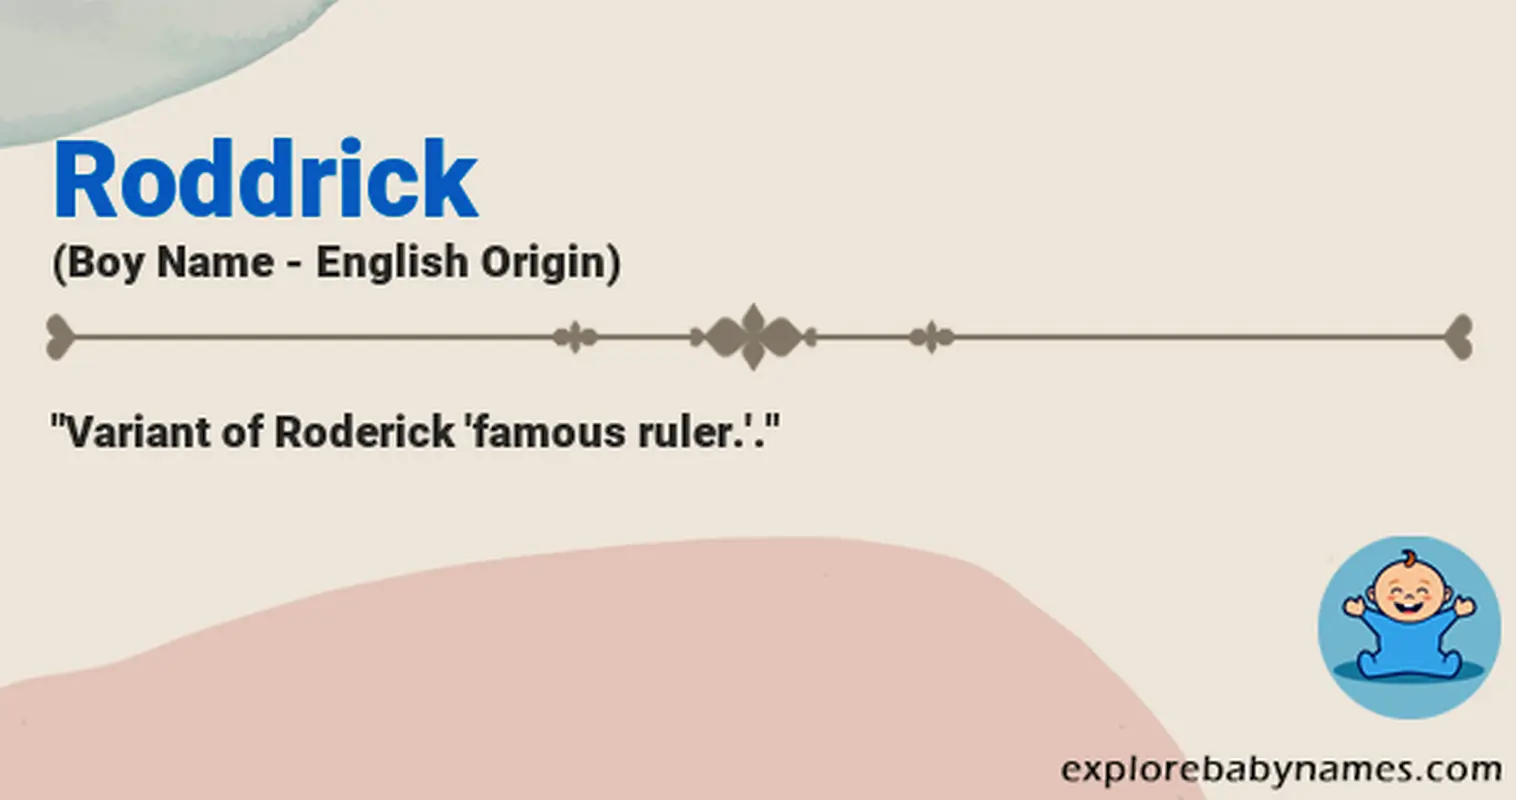 Meaning of Roddrick